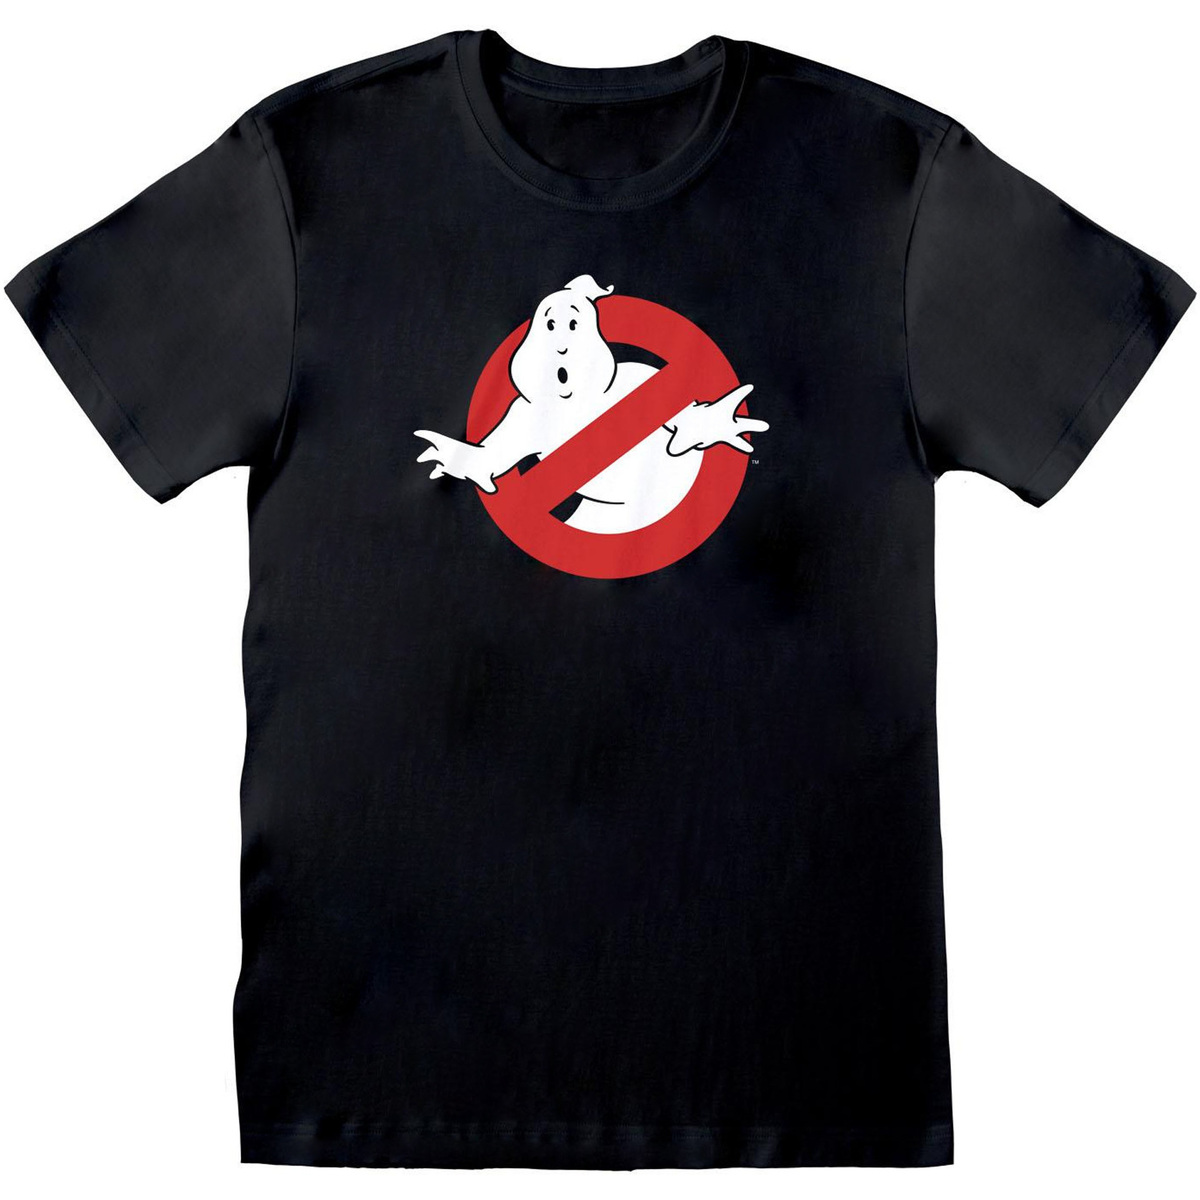 Abbigliamento T-shirts a maniche lunghe Ghostbusters HE754 Nero